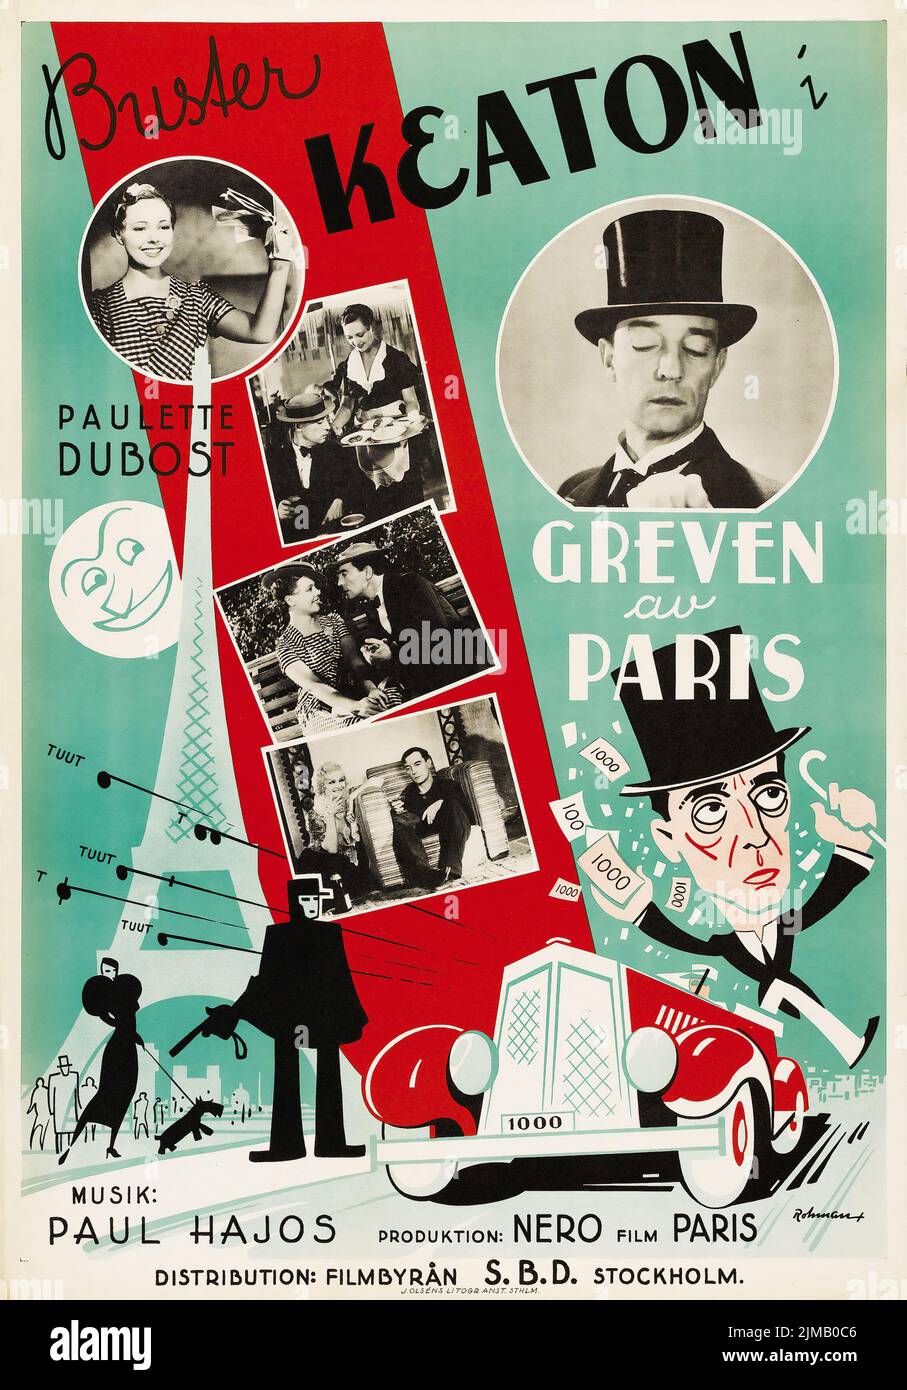 Buster Keaton - Greven av Paris - The Champs of the Champs Elysees (Paramount, 1934). Swedish film poster - Eric Rohman artwork Stock Photo